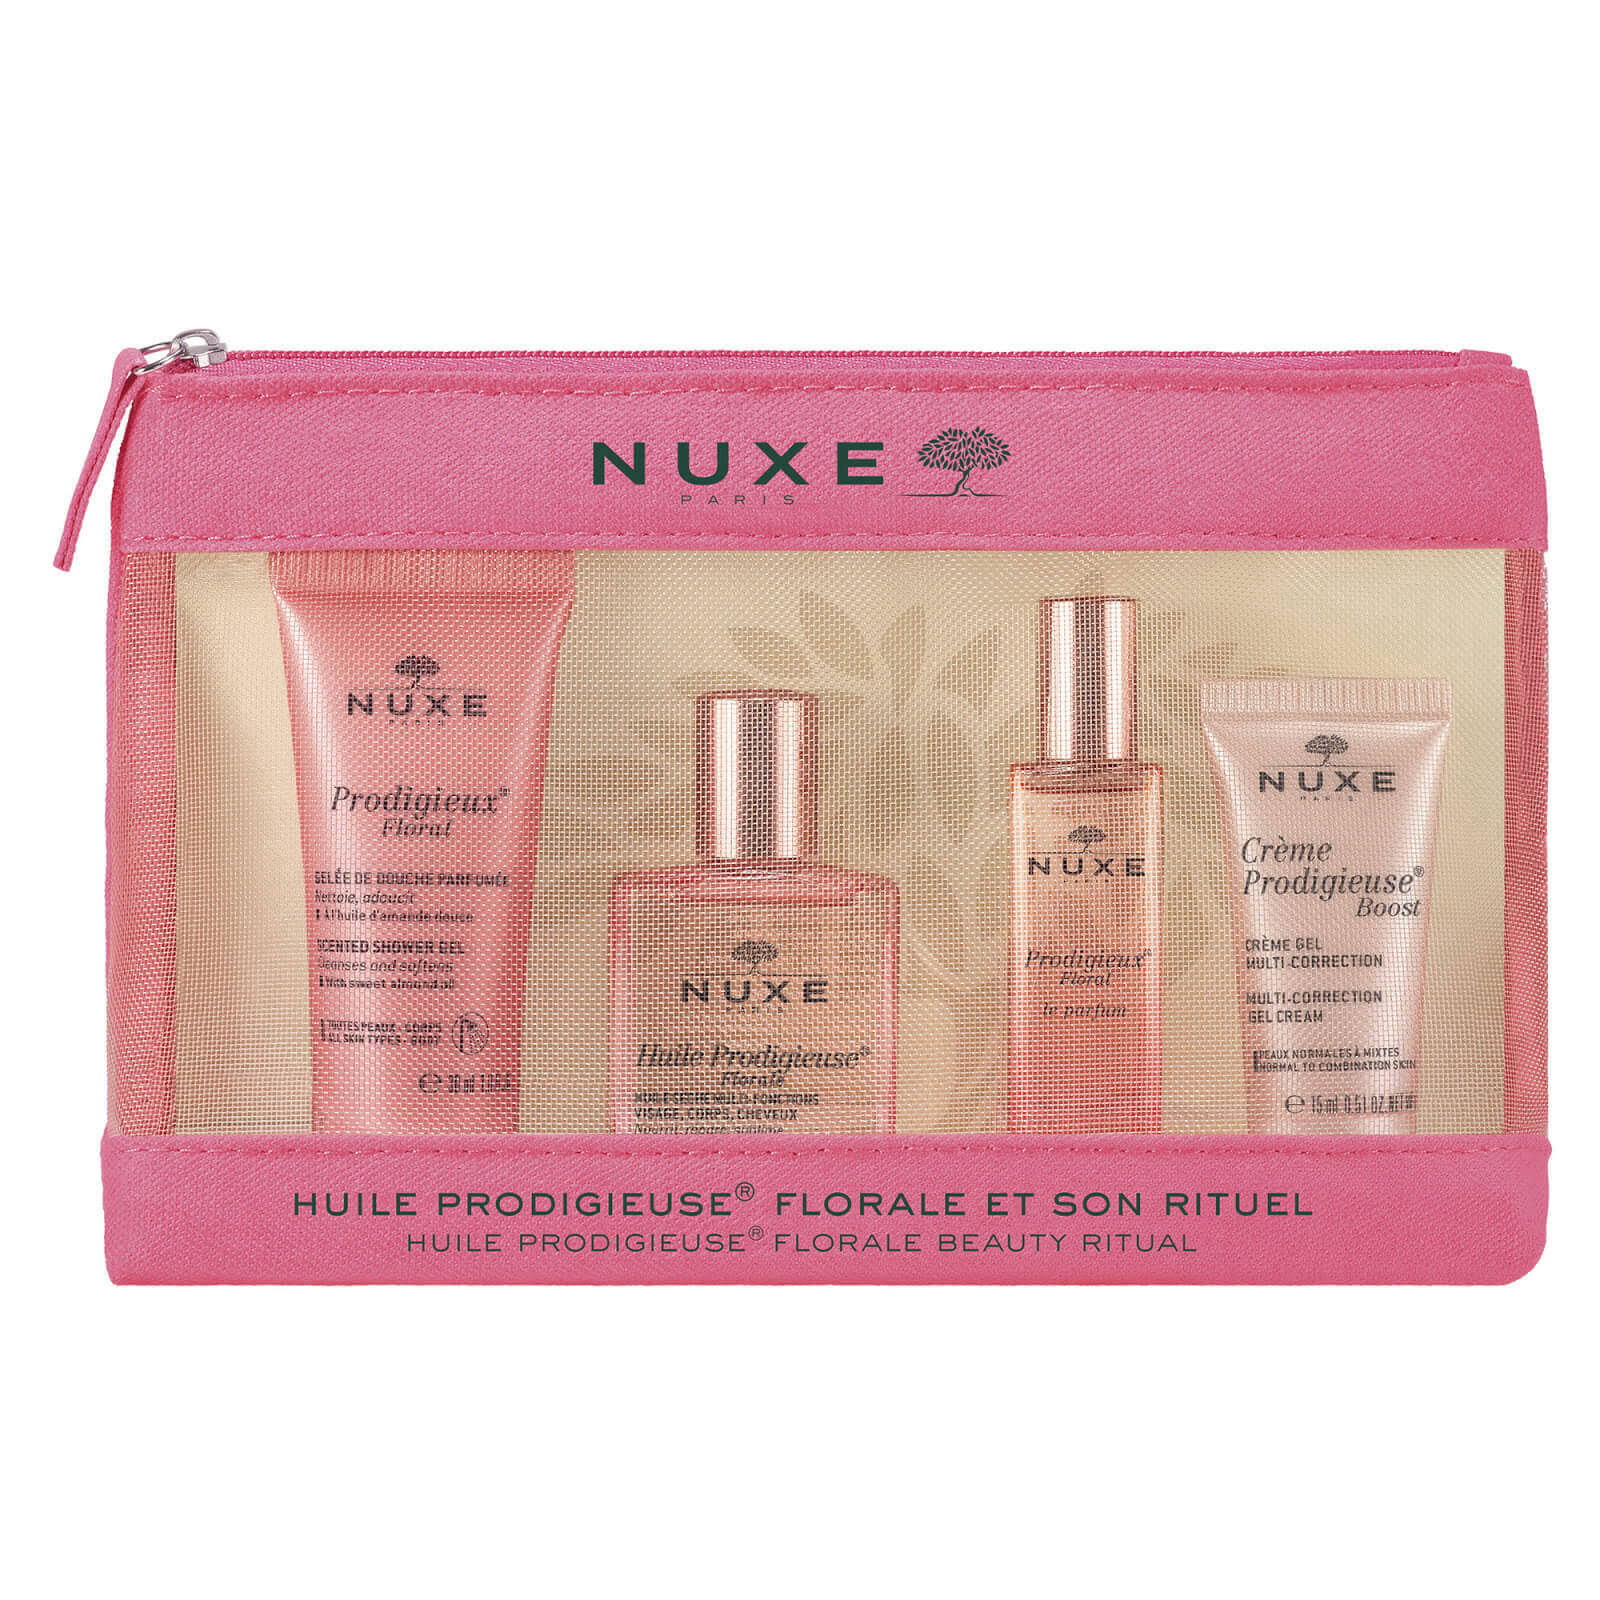 Nuxe | Prodigieux Floral Travel Kit